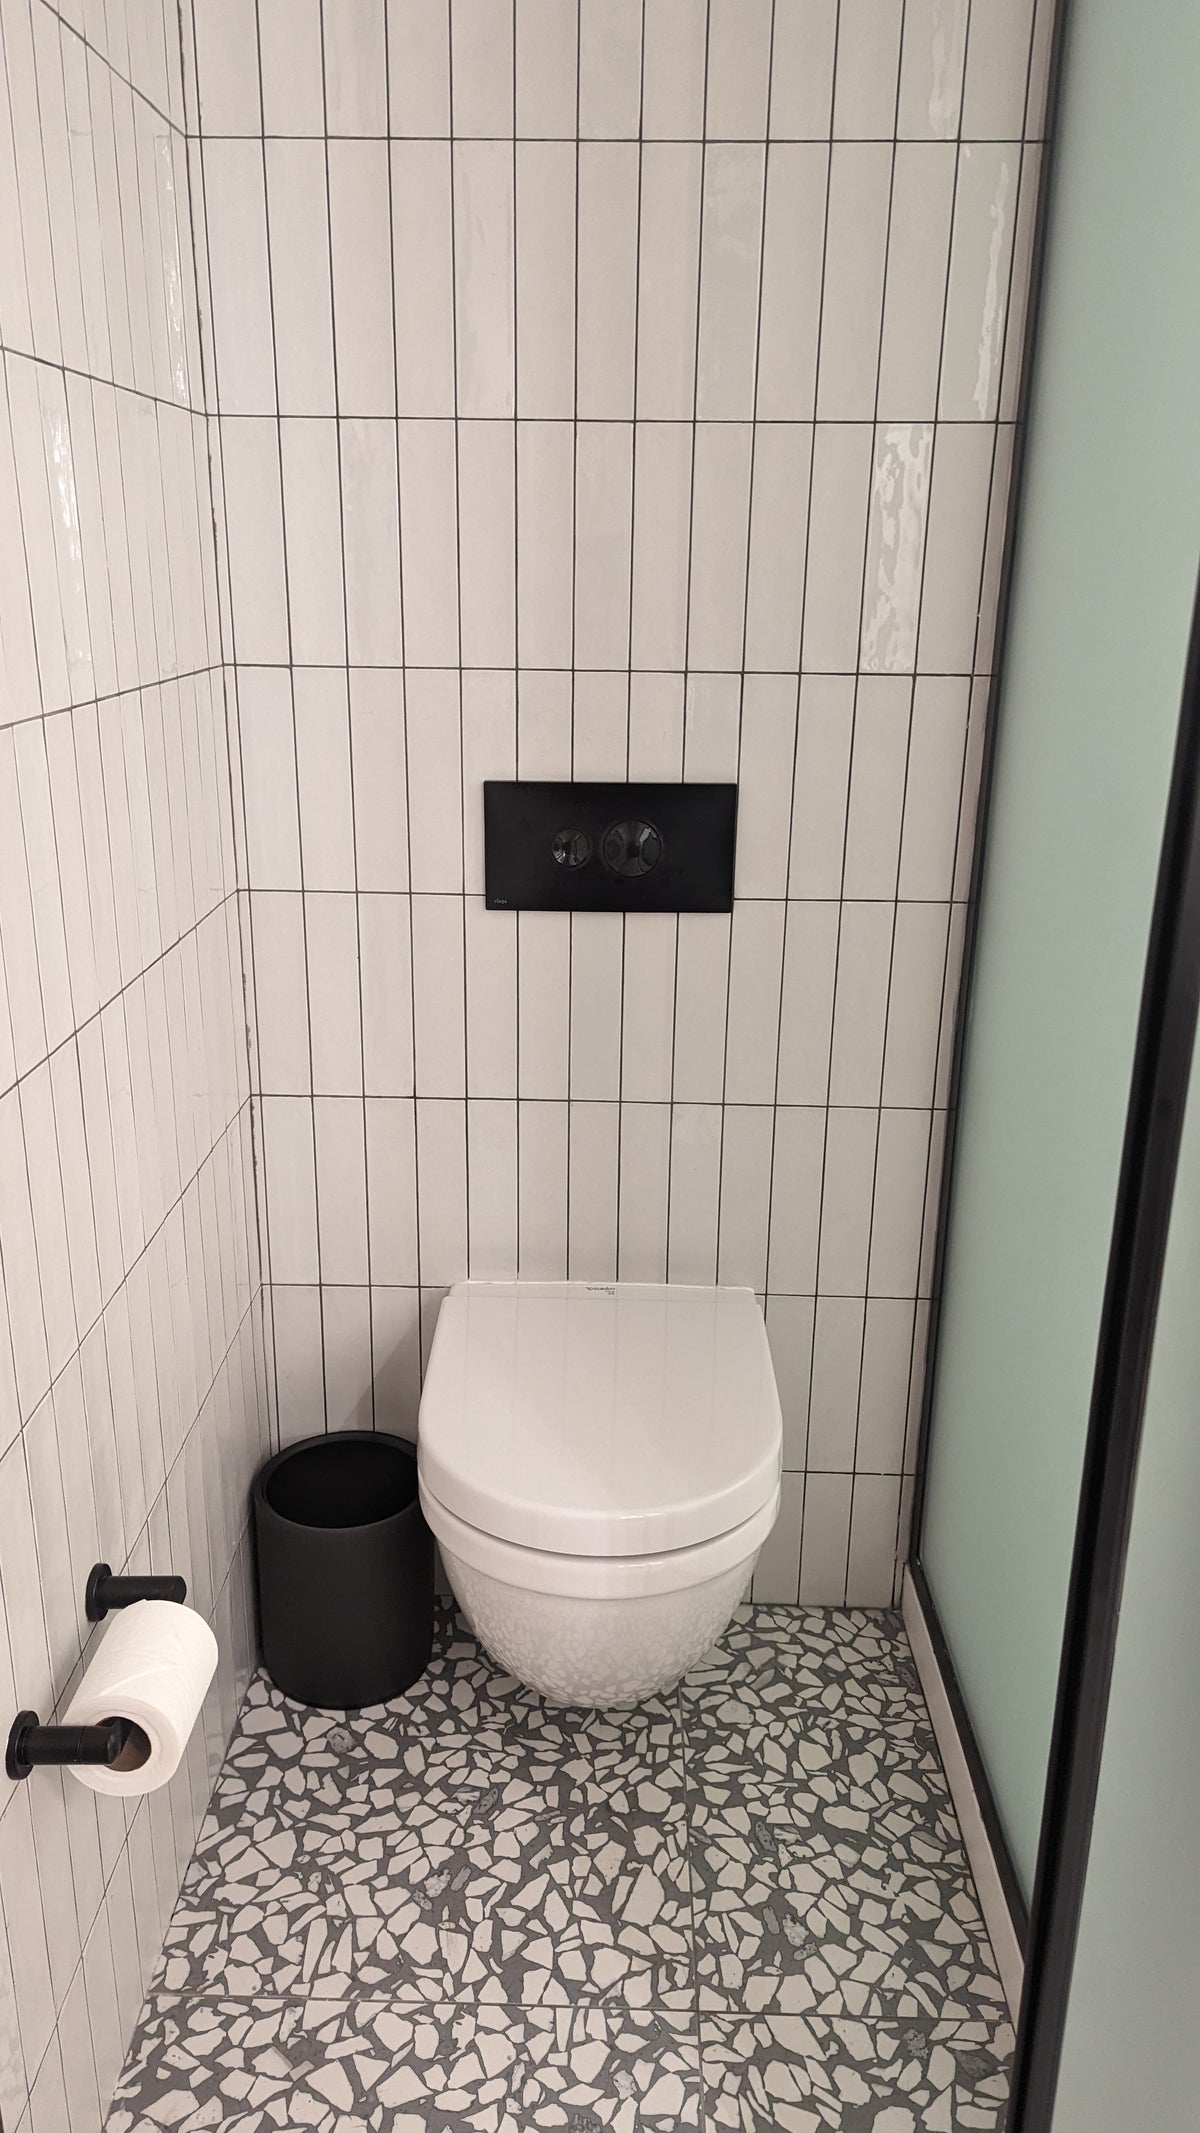 Motto by Hilton New York City Times Square guestroom bathroom toilet enclosure